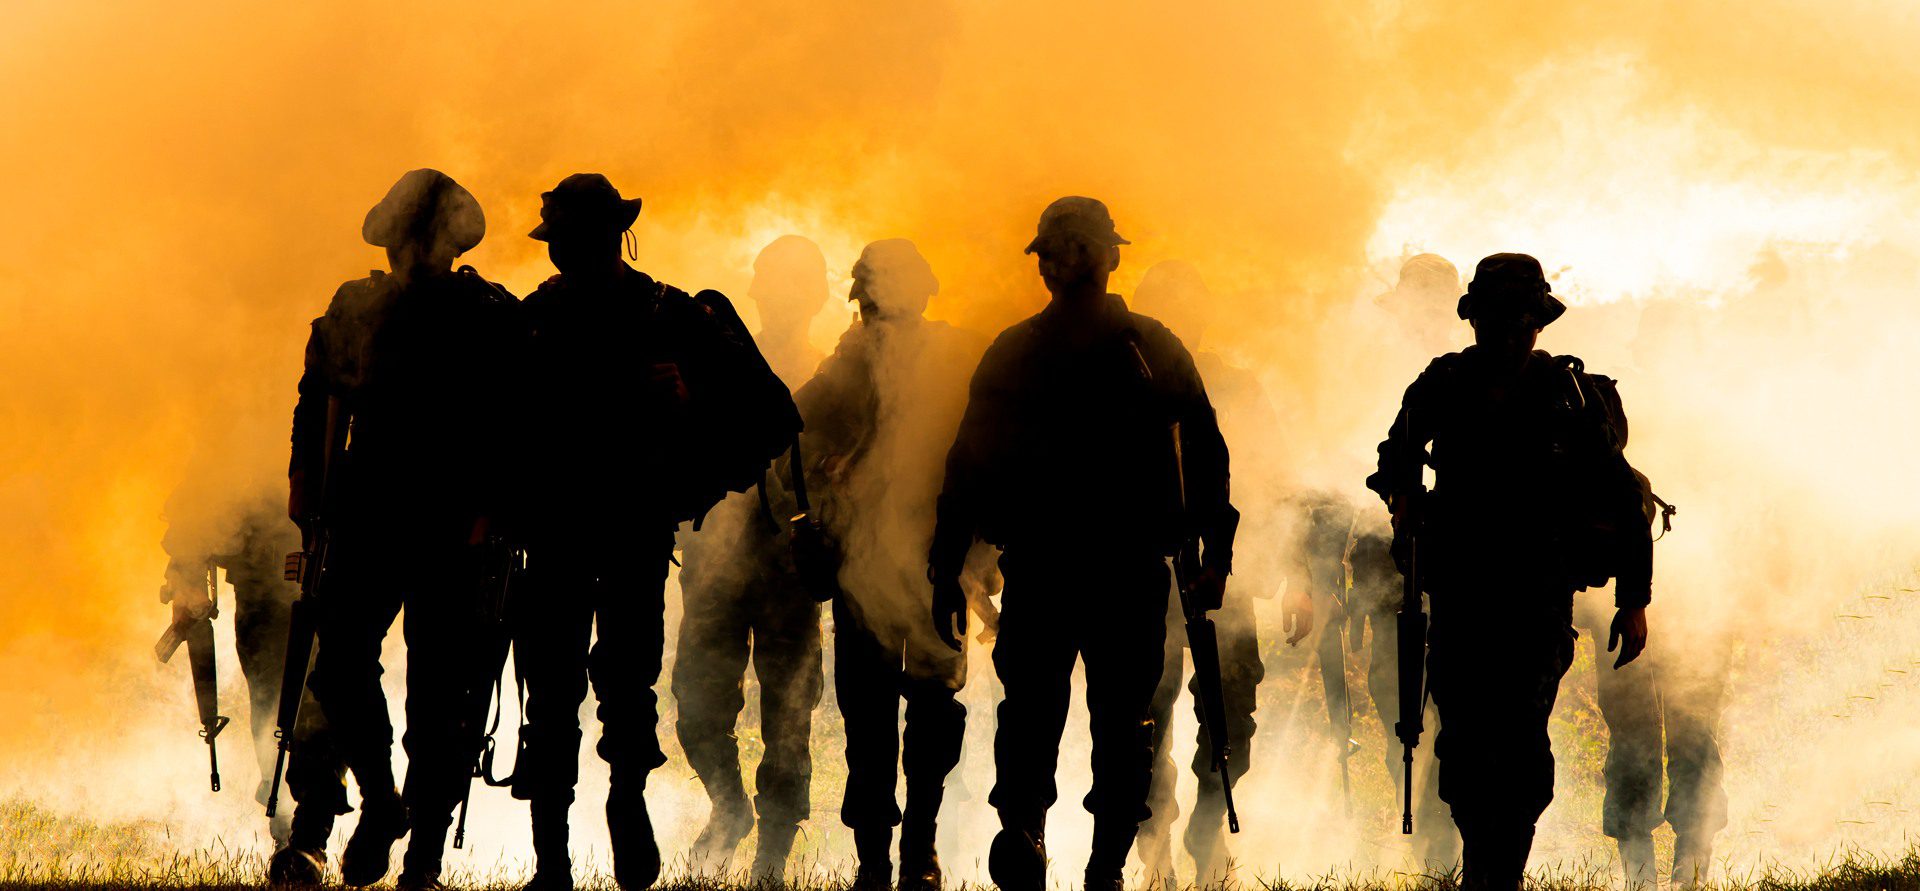 Military silhouettes fighting scene on war fog